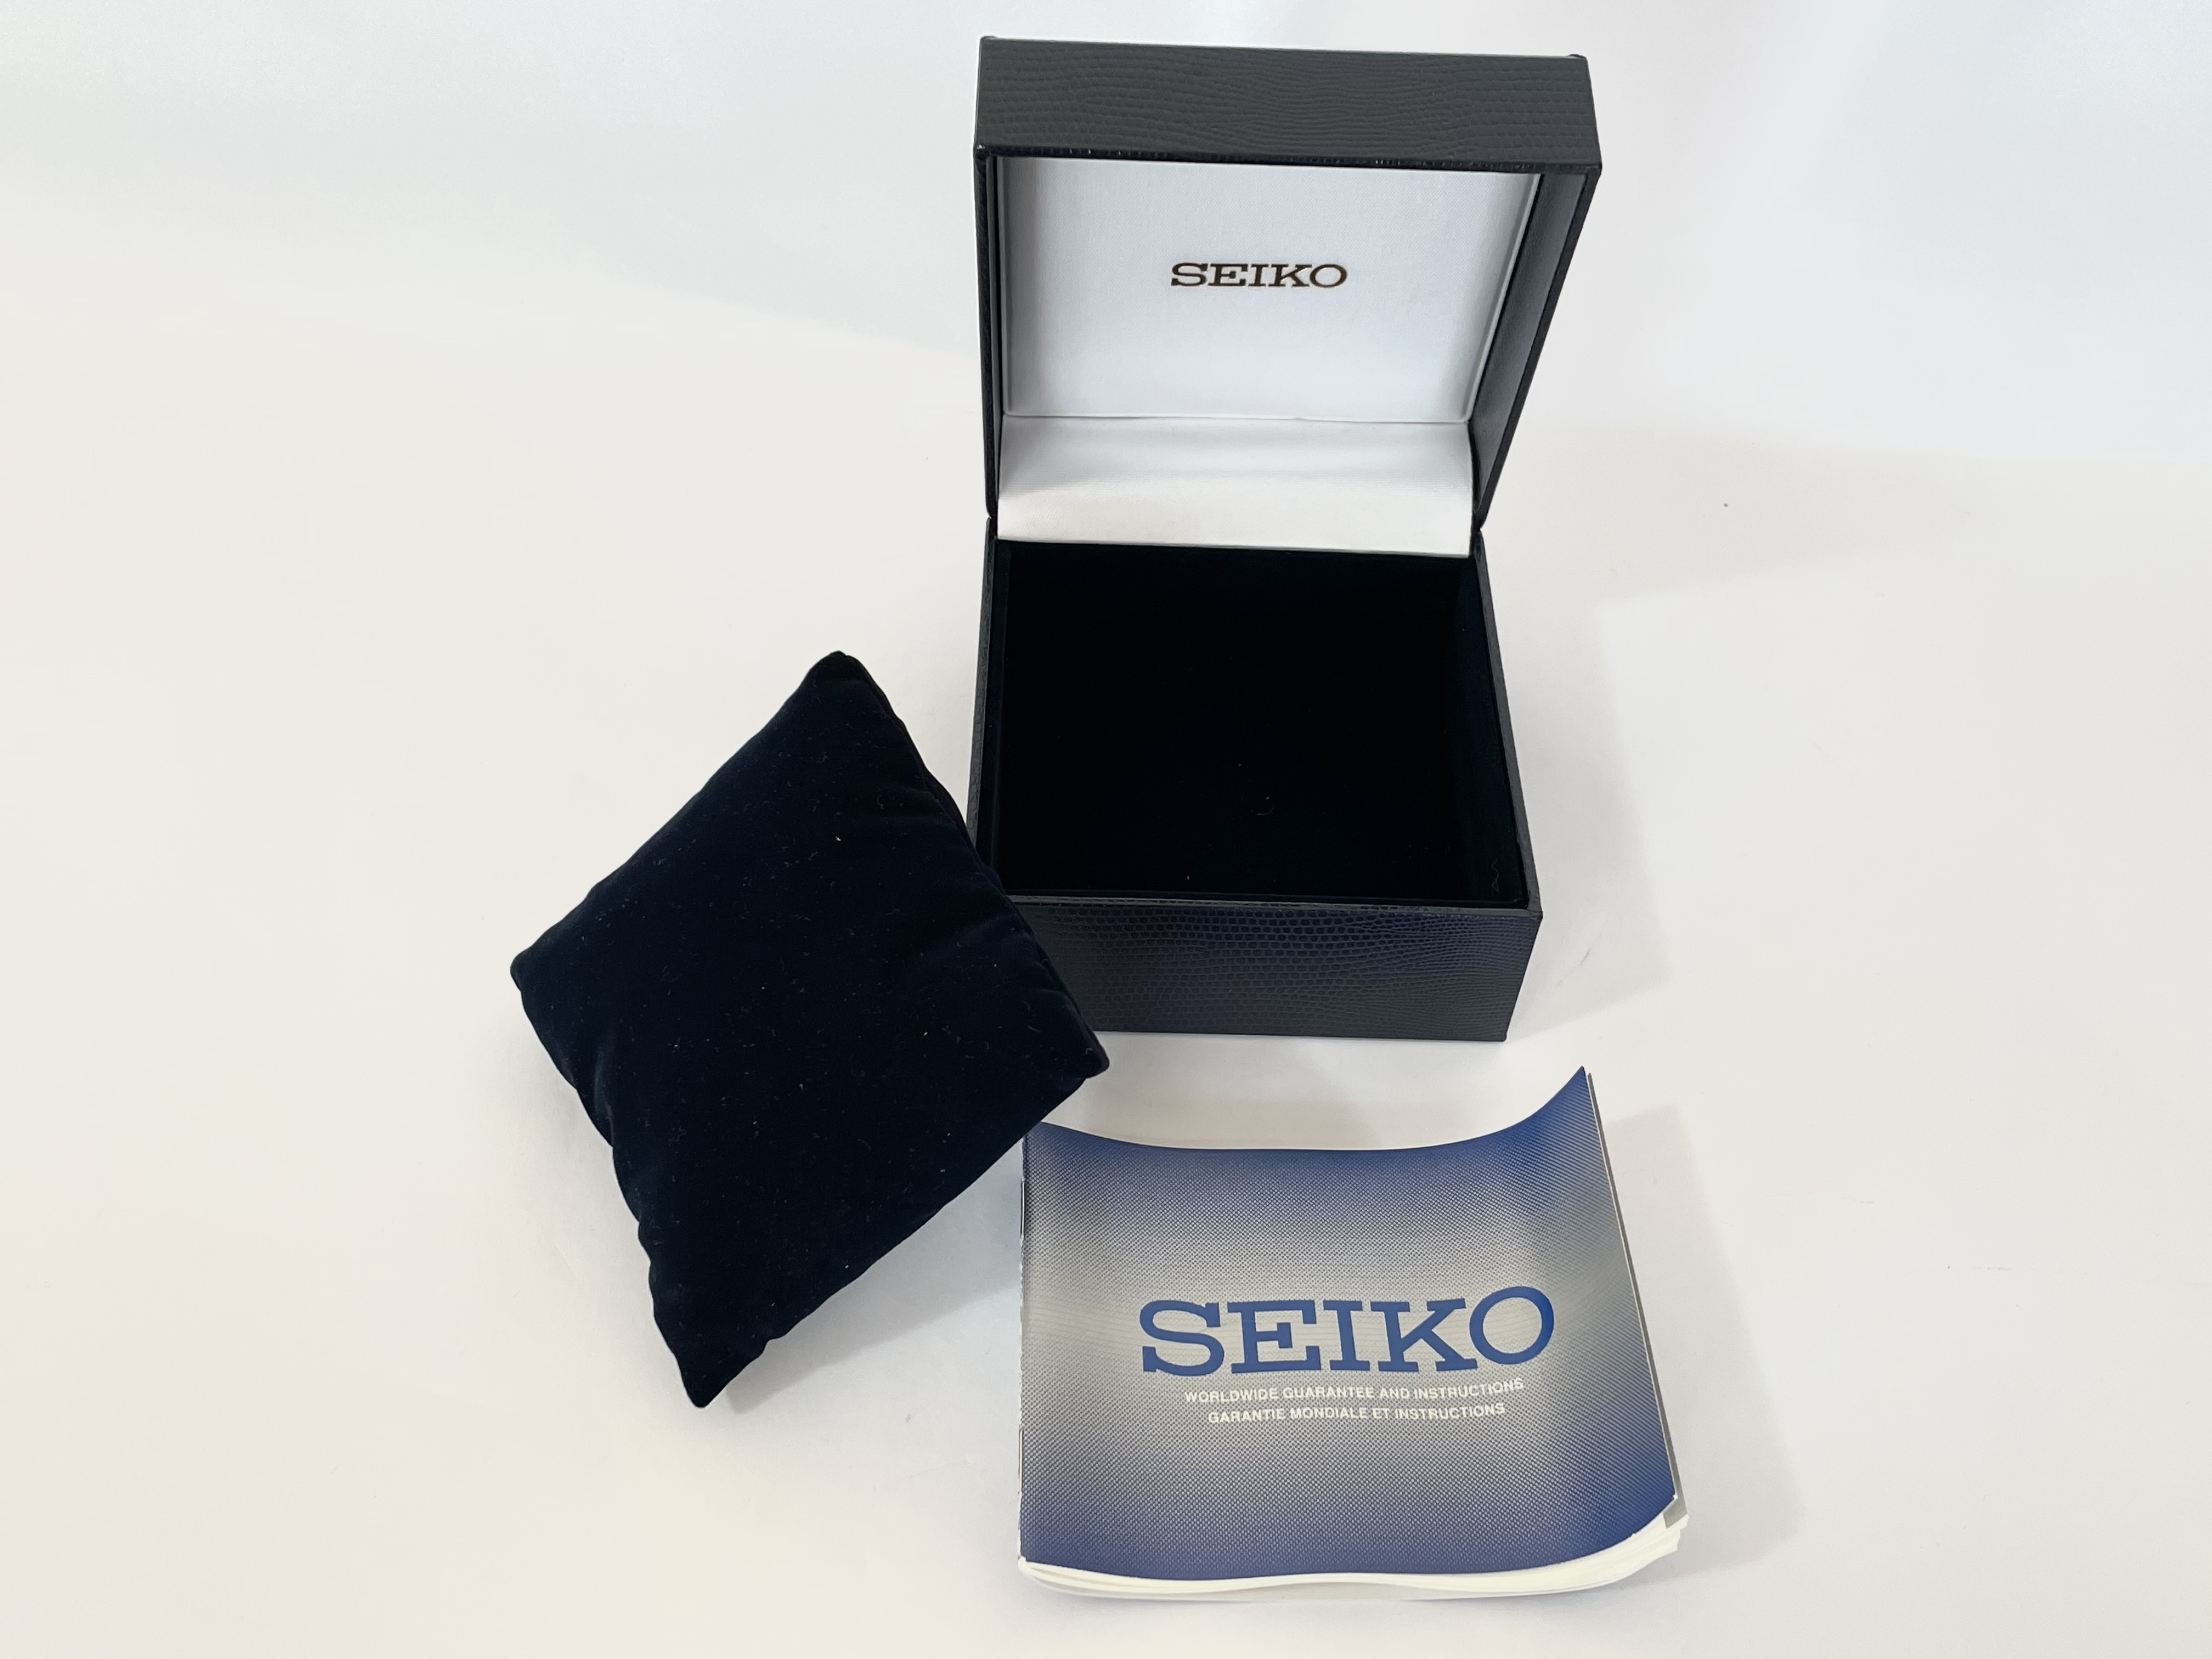 Seiko watch box with guarantee instructions - Seiko